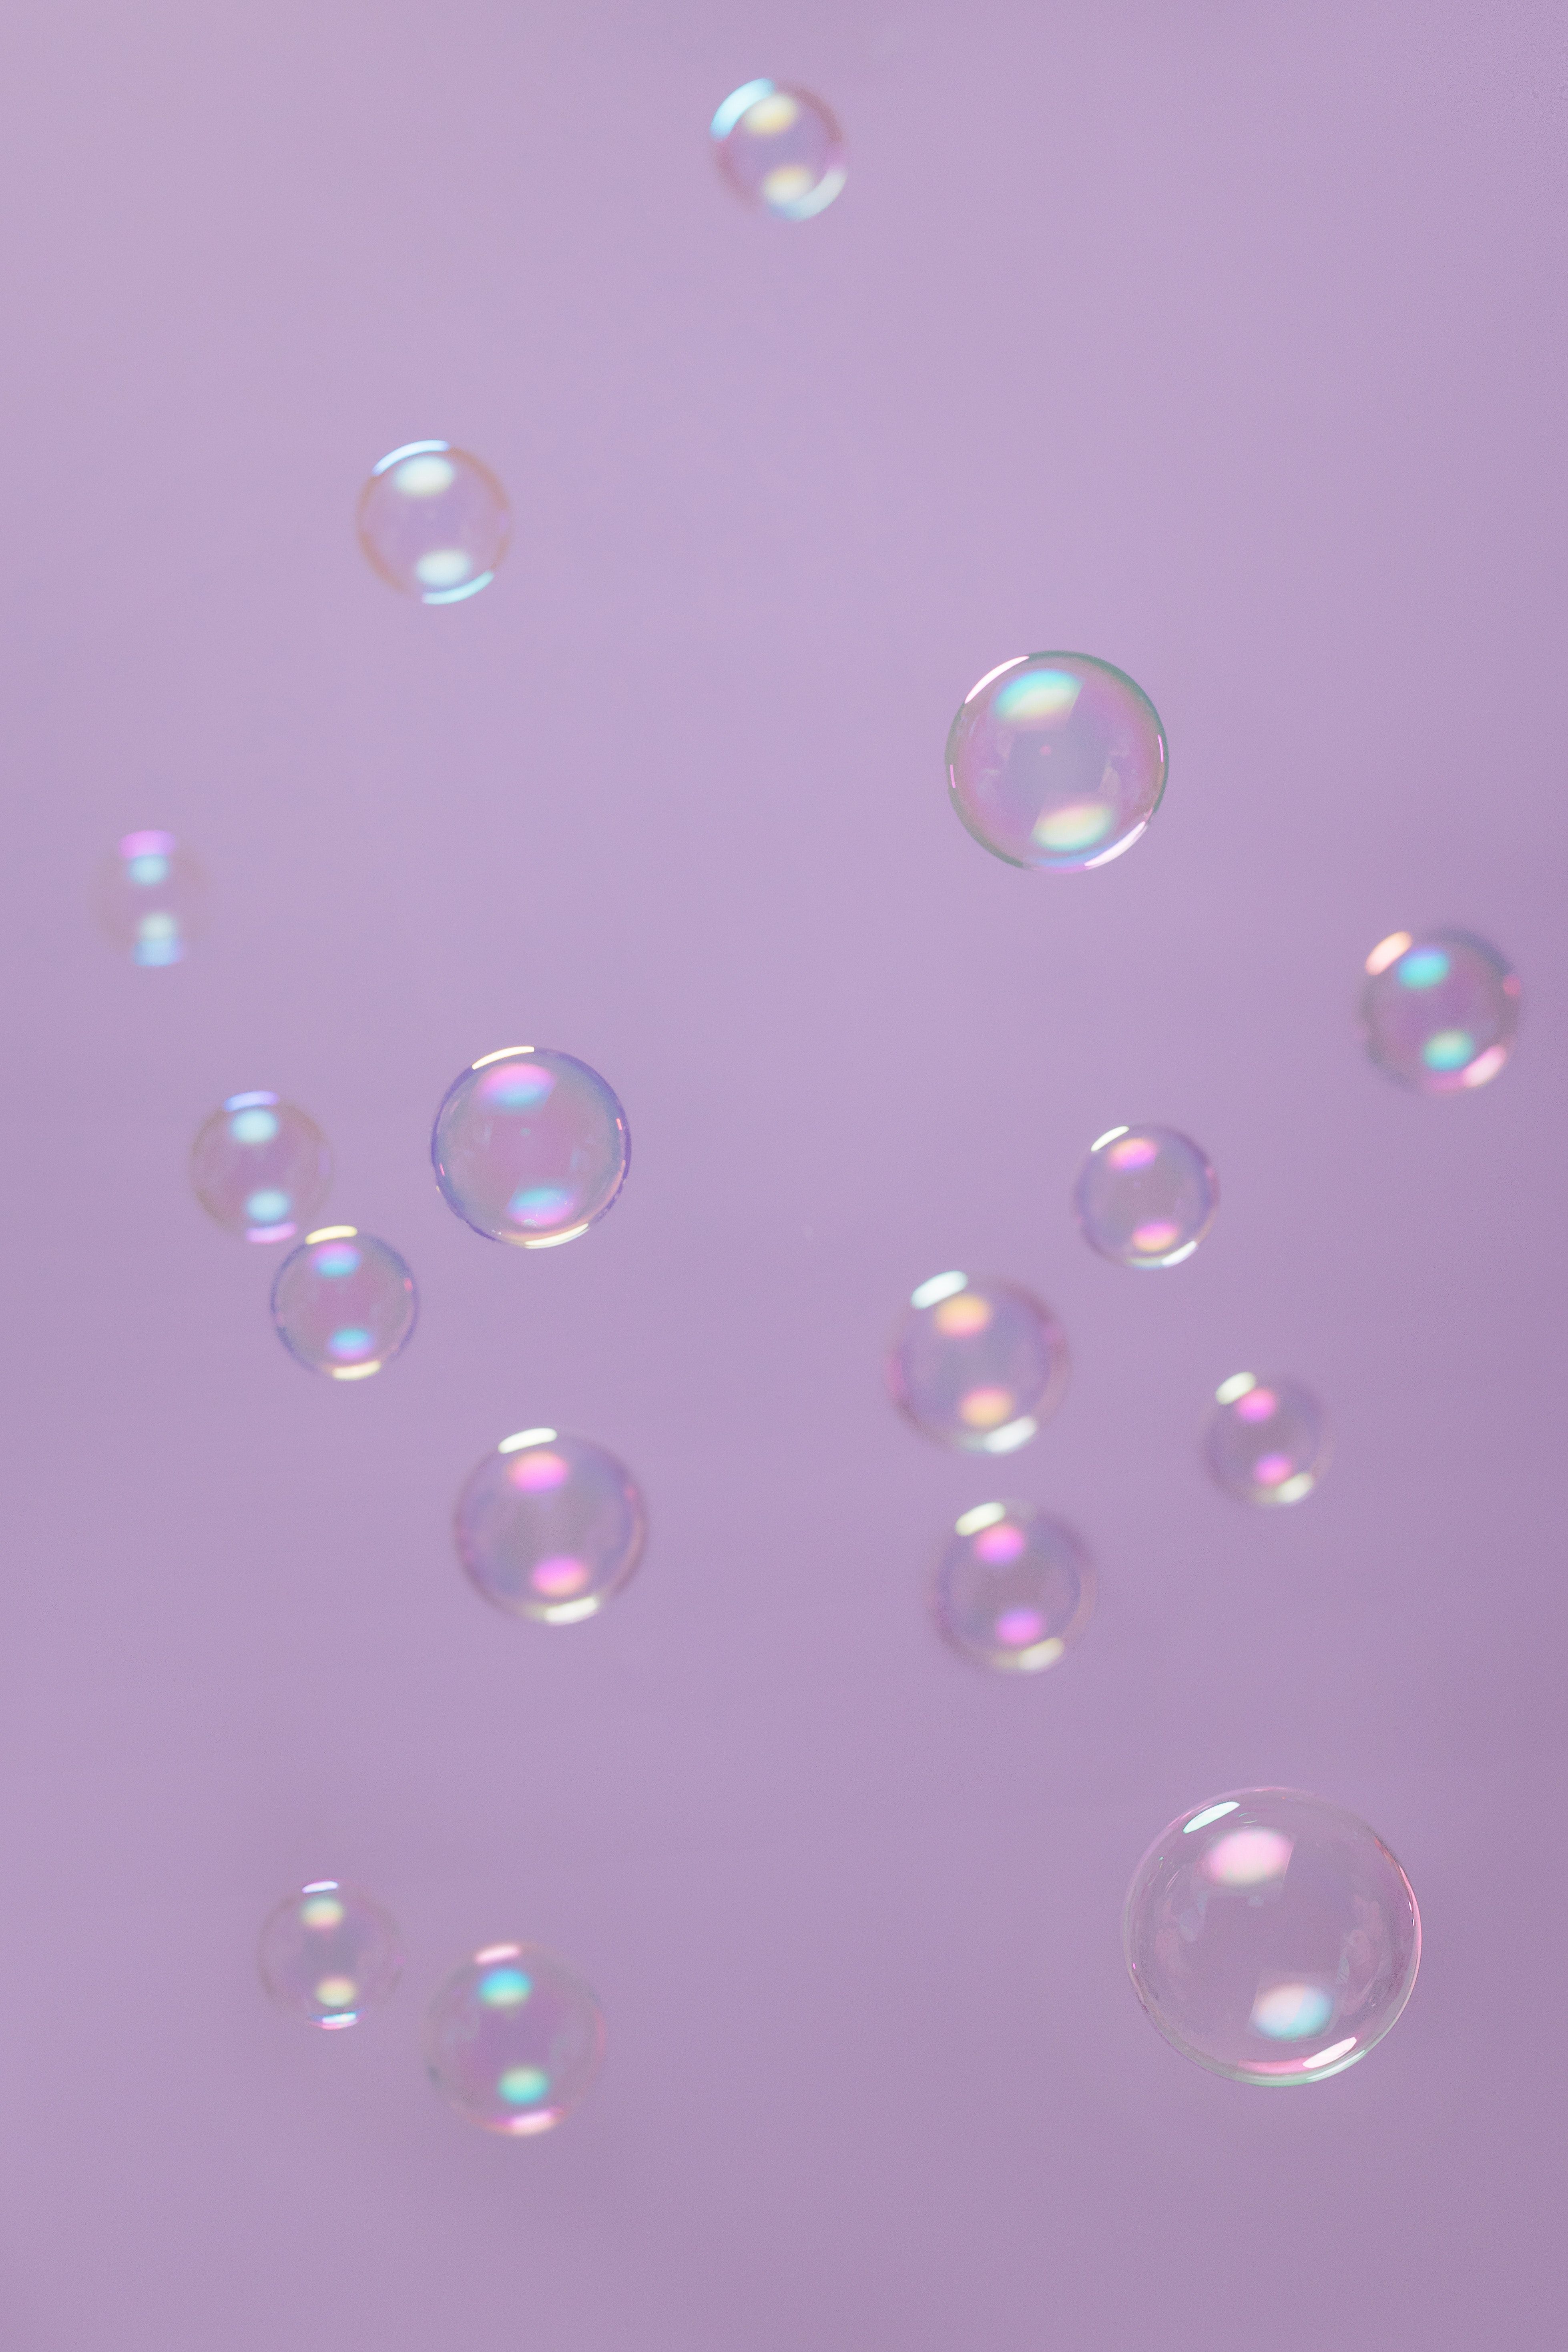 A close up of bubbles on top - Bubbles